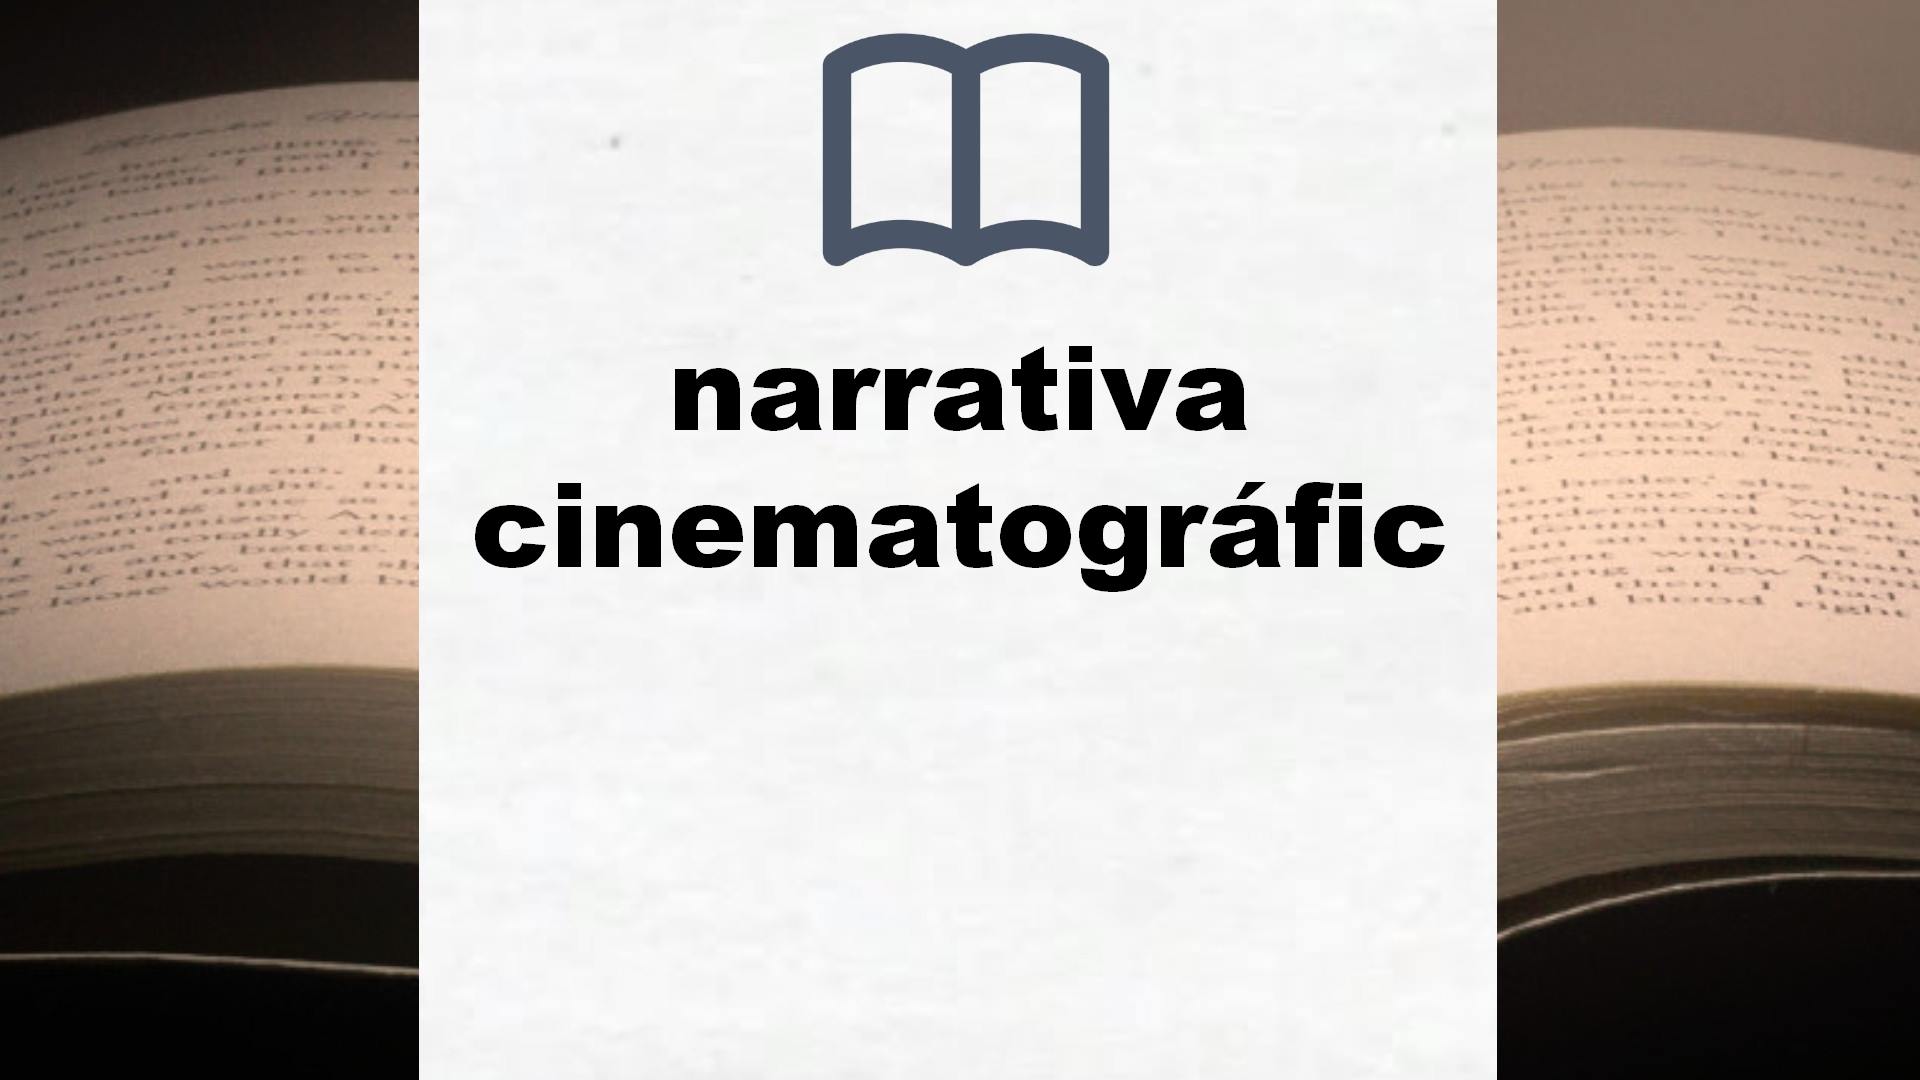 Libros sobre narrativa cinematográfica